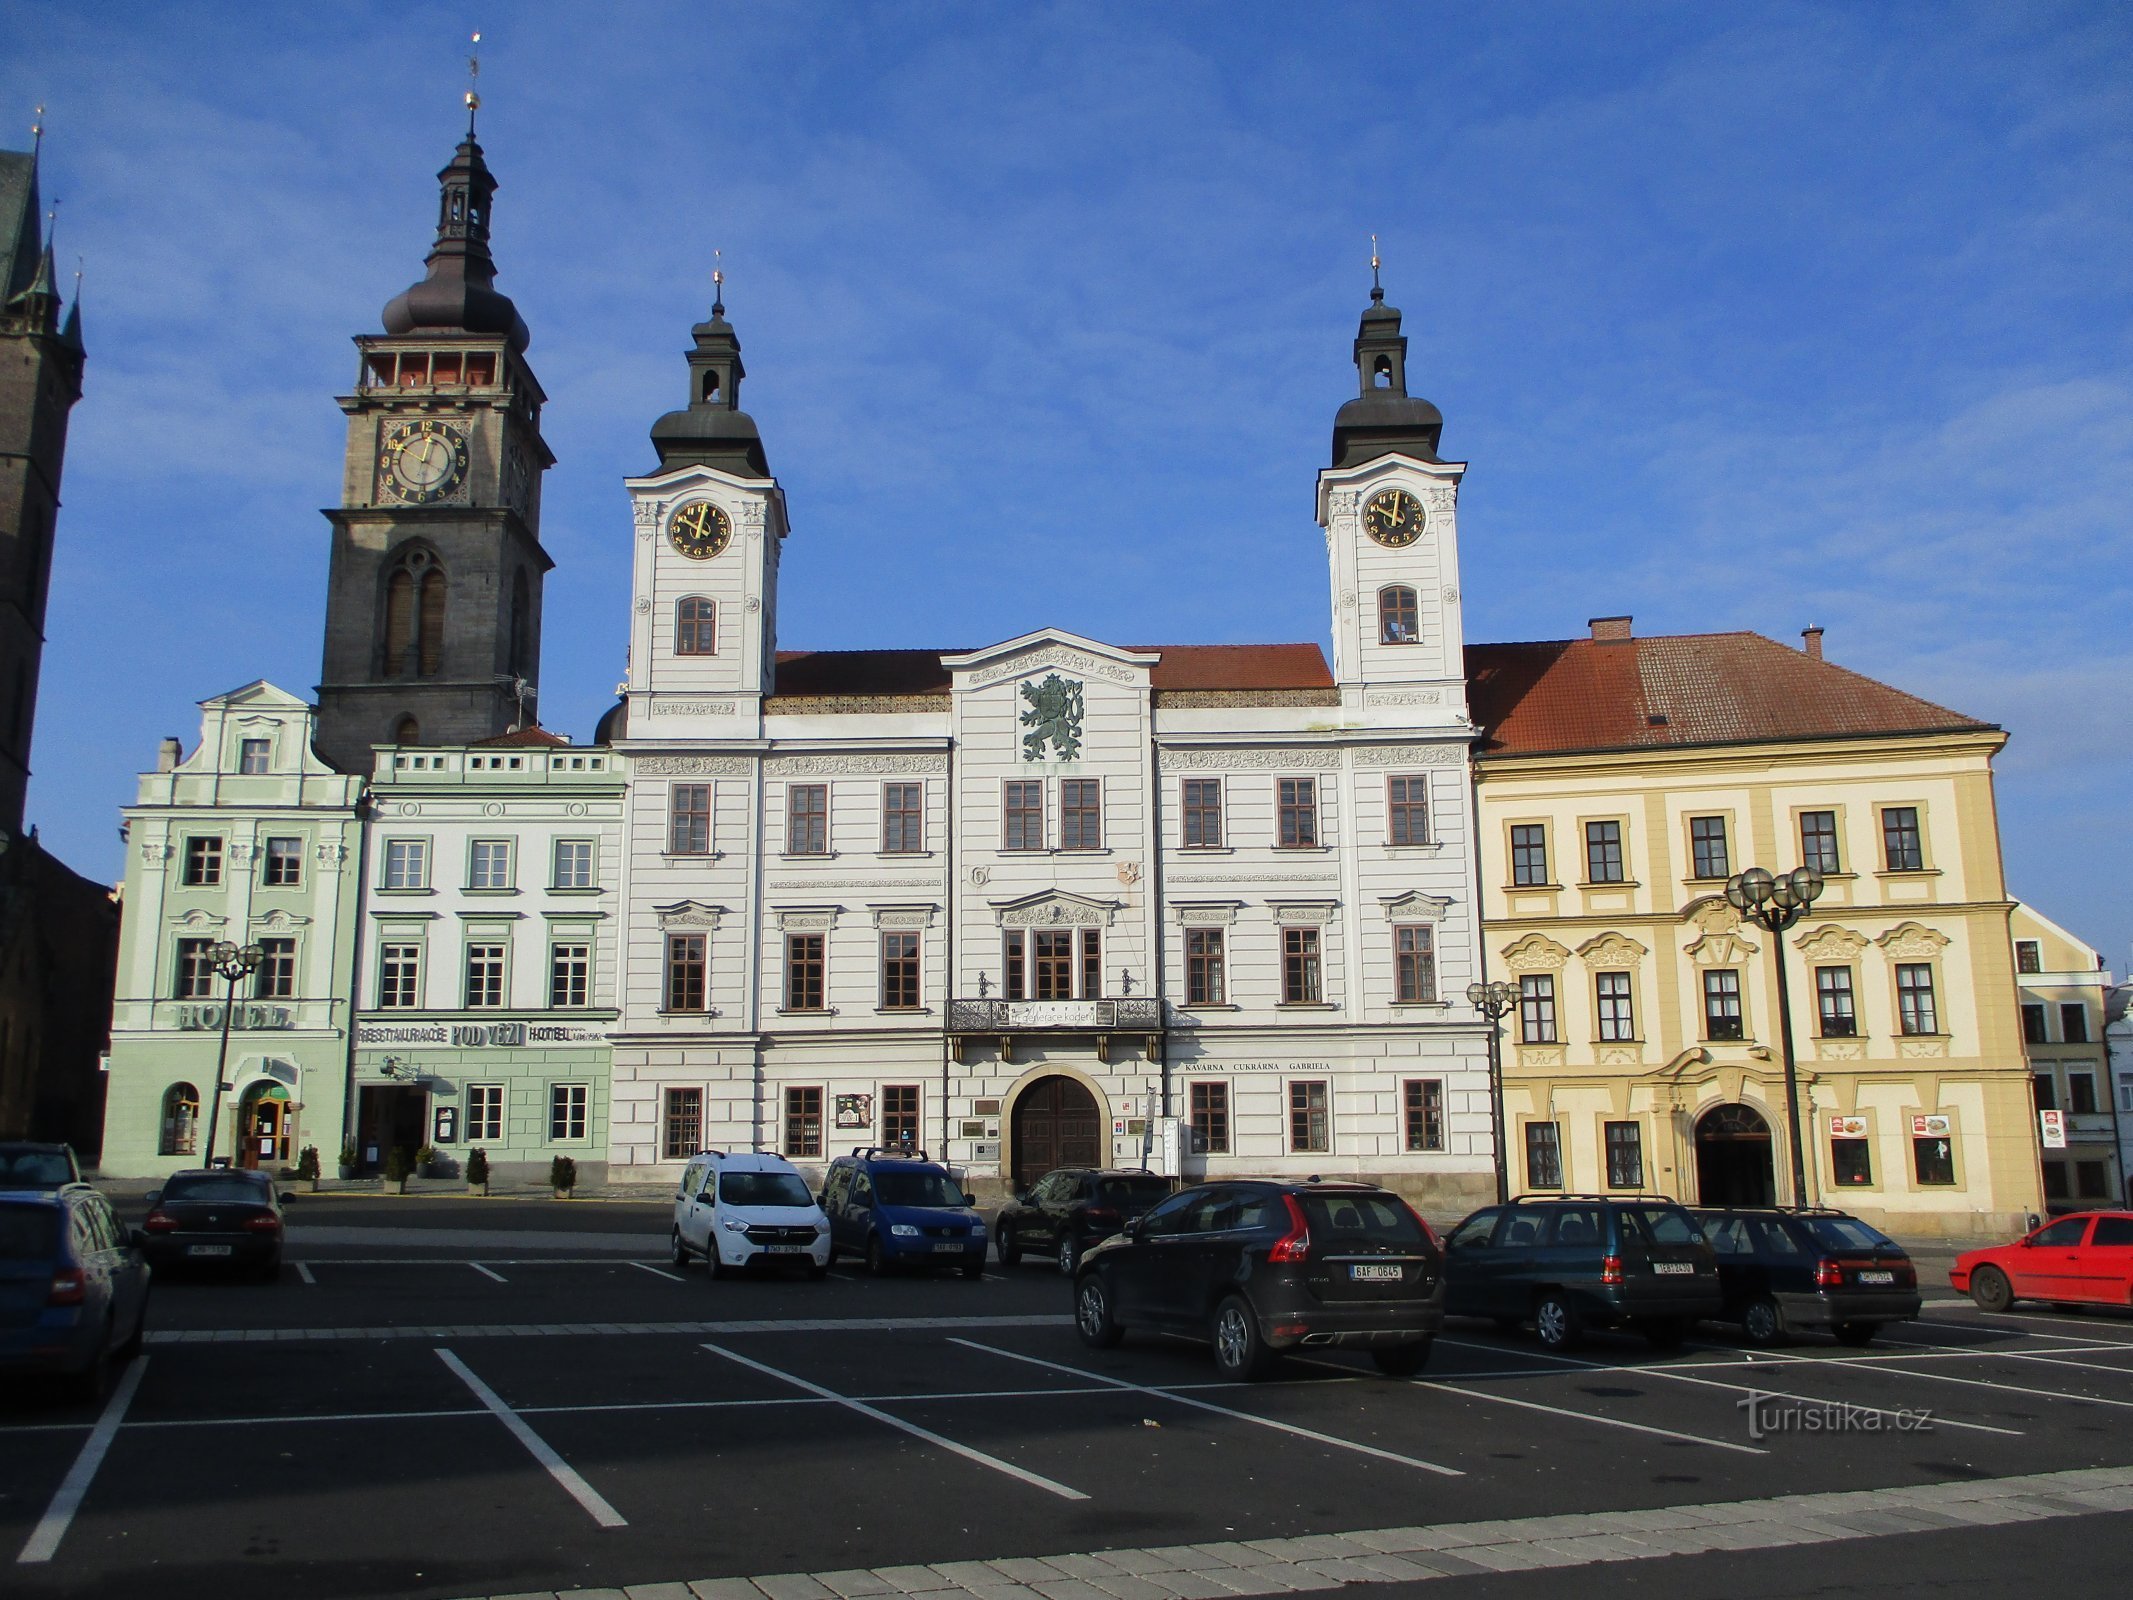 The western row of houses in Velké náměstí (Hradec Králové, February 9.2.2020, XNUMX)